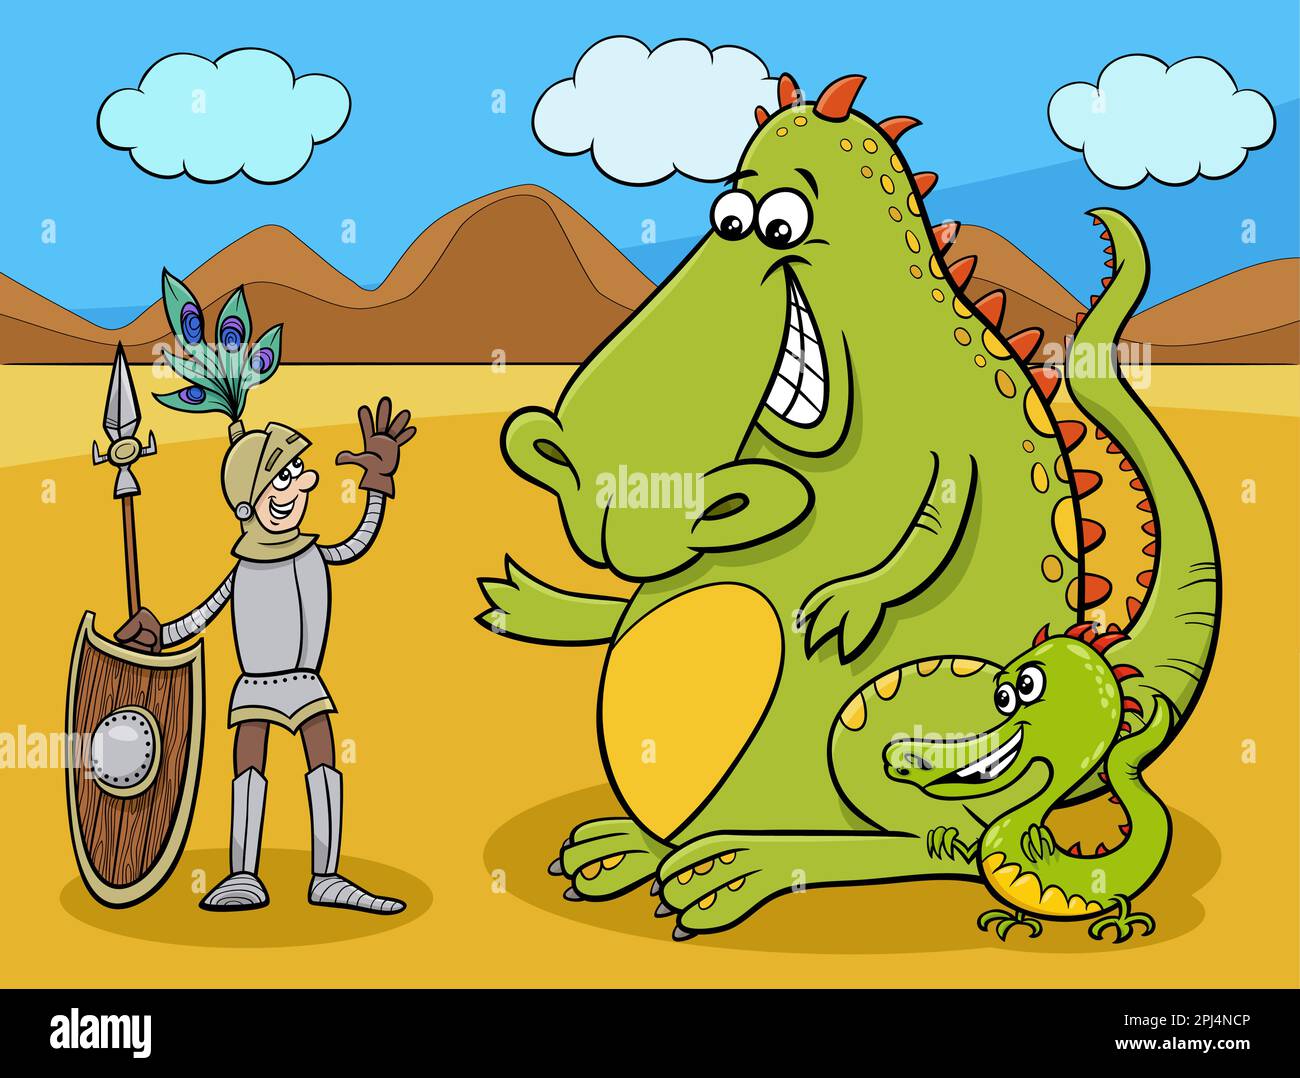 Cartoon humorous fantasy illustration of dragons and knight having a friendly talk Stock Vector